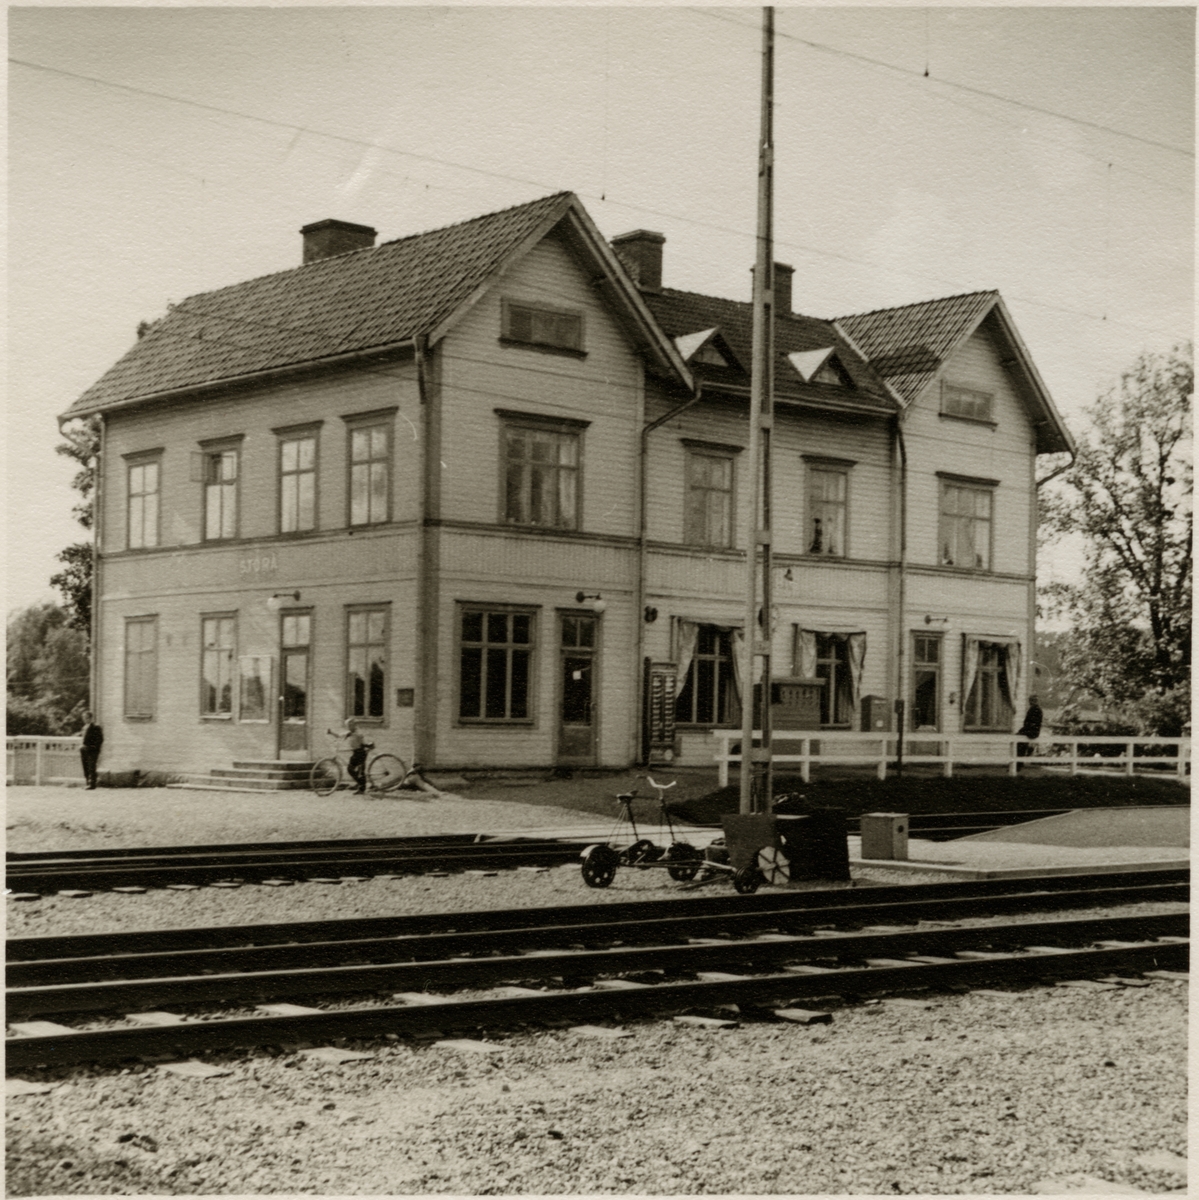 Storå station.